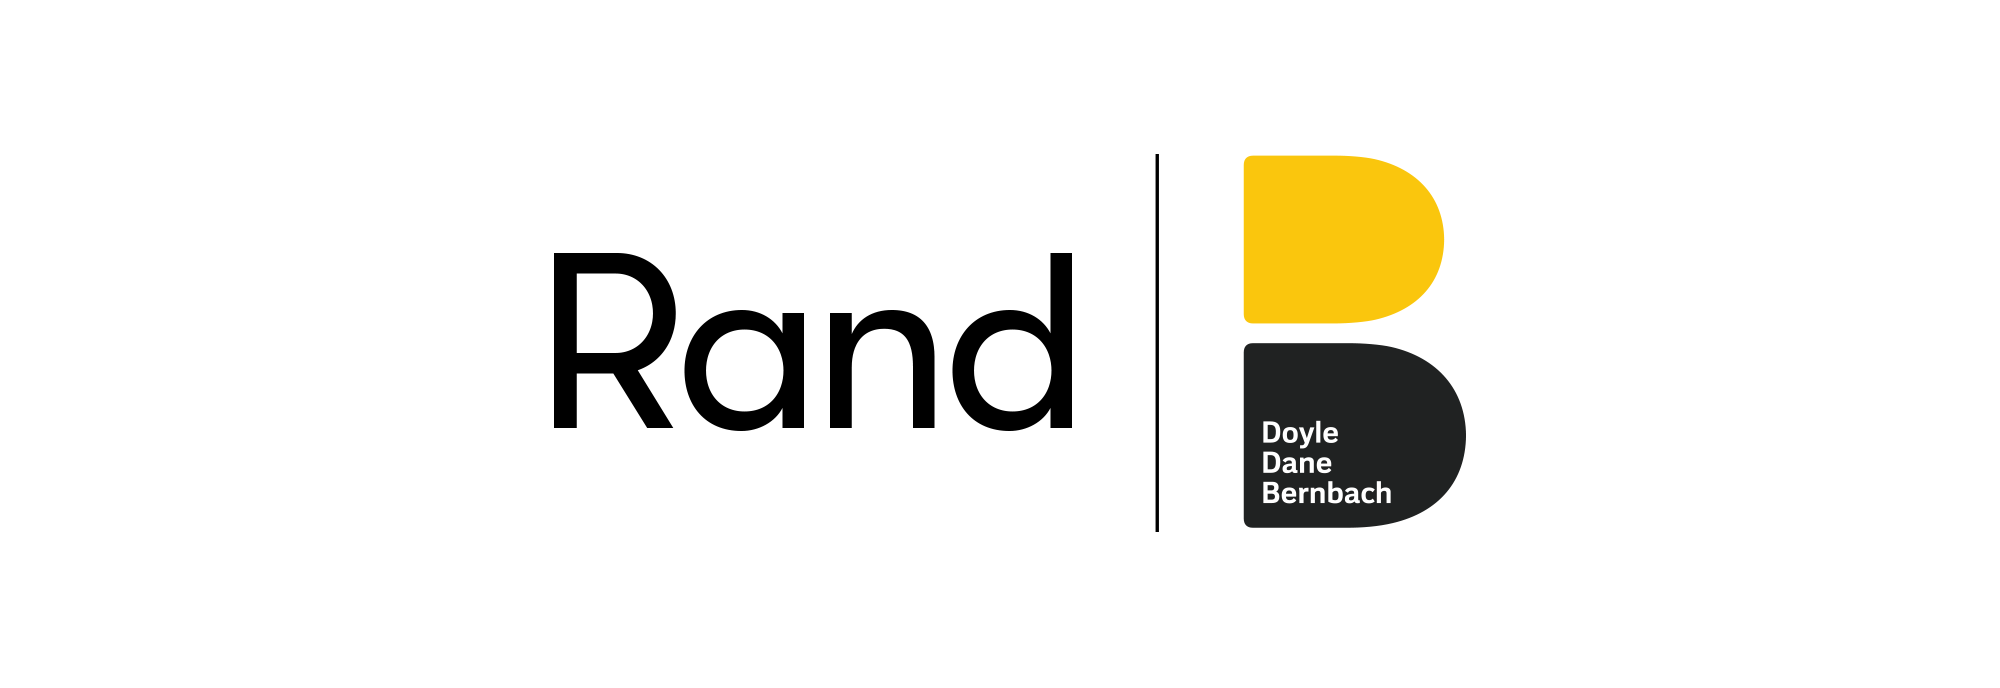 DDB Rand Logo Exploration 01